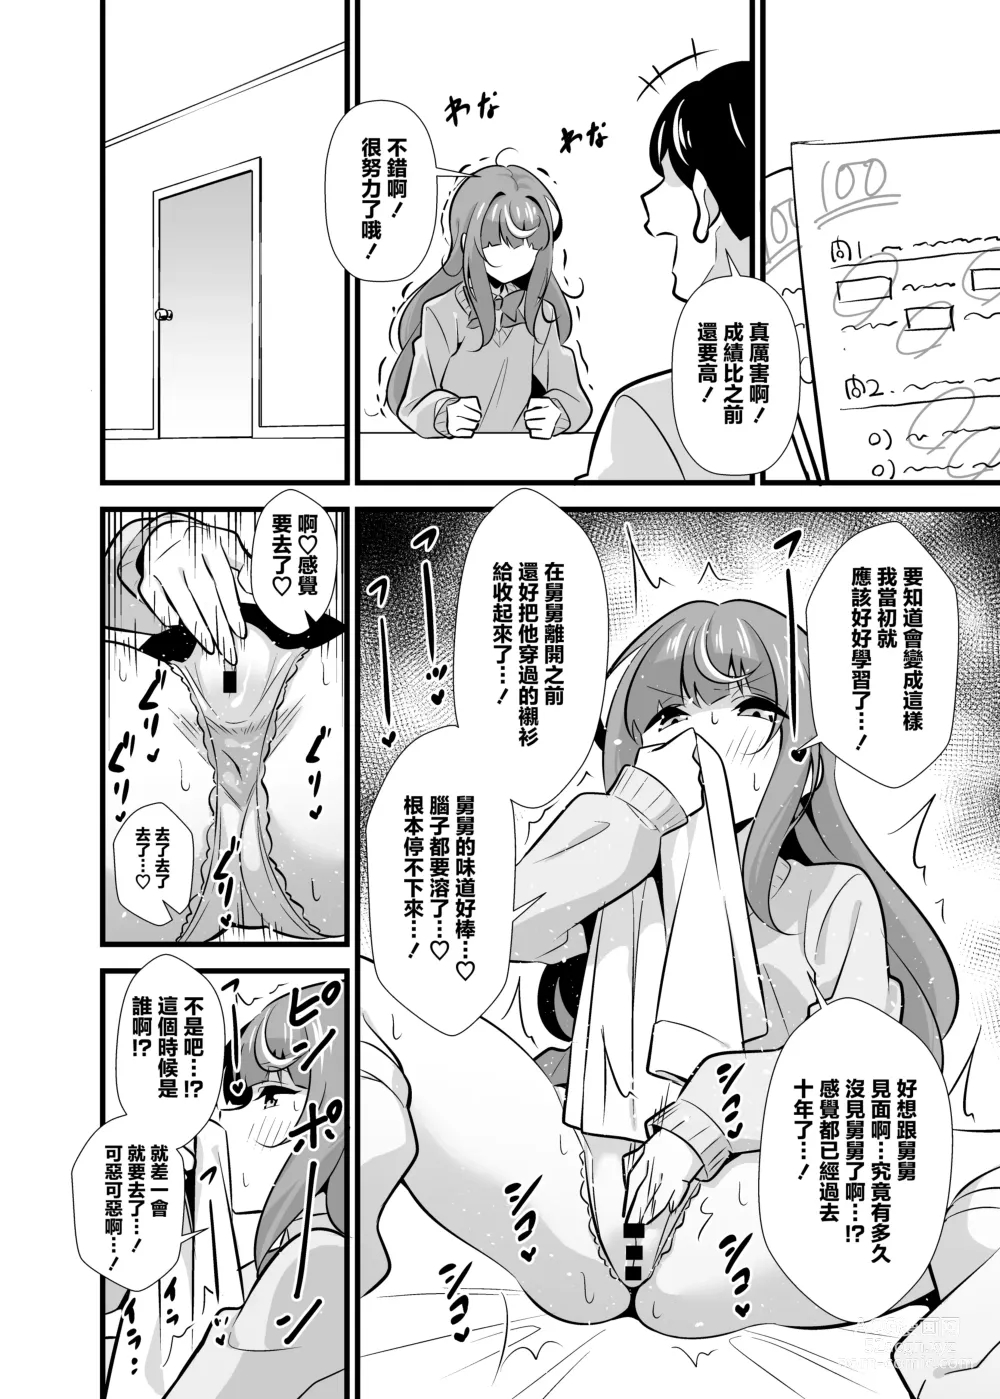 Page 5 of doujinshi 叔父催眠2 因為愛慕舅舅,被髮情期無法壓抑的姪女給瘋狂搾精的逆強姦♡